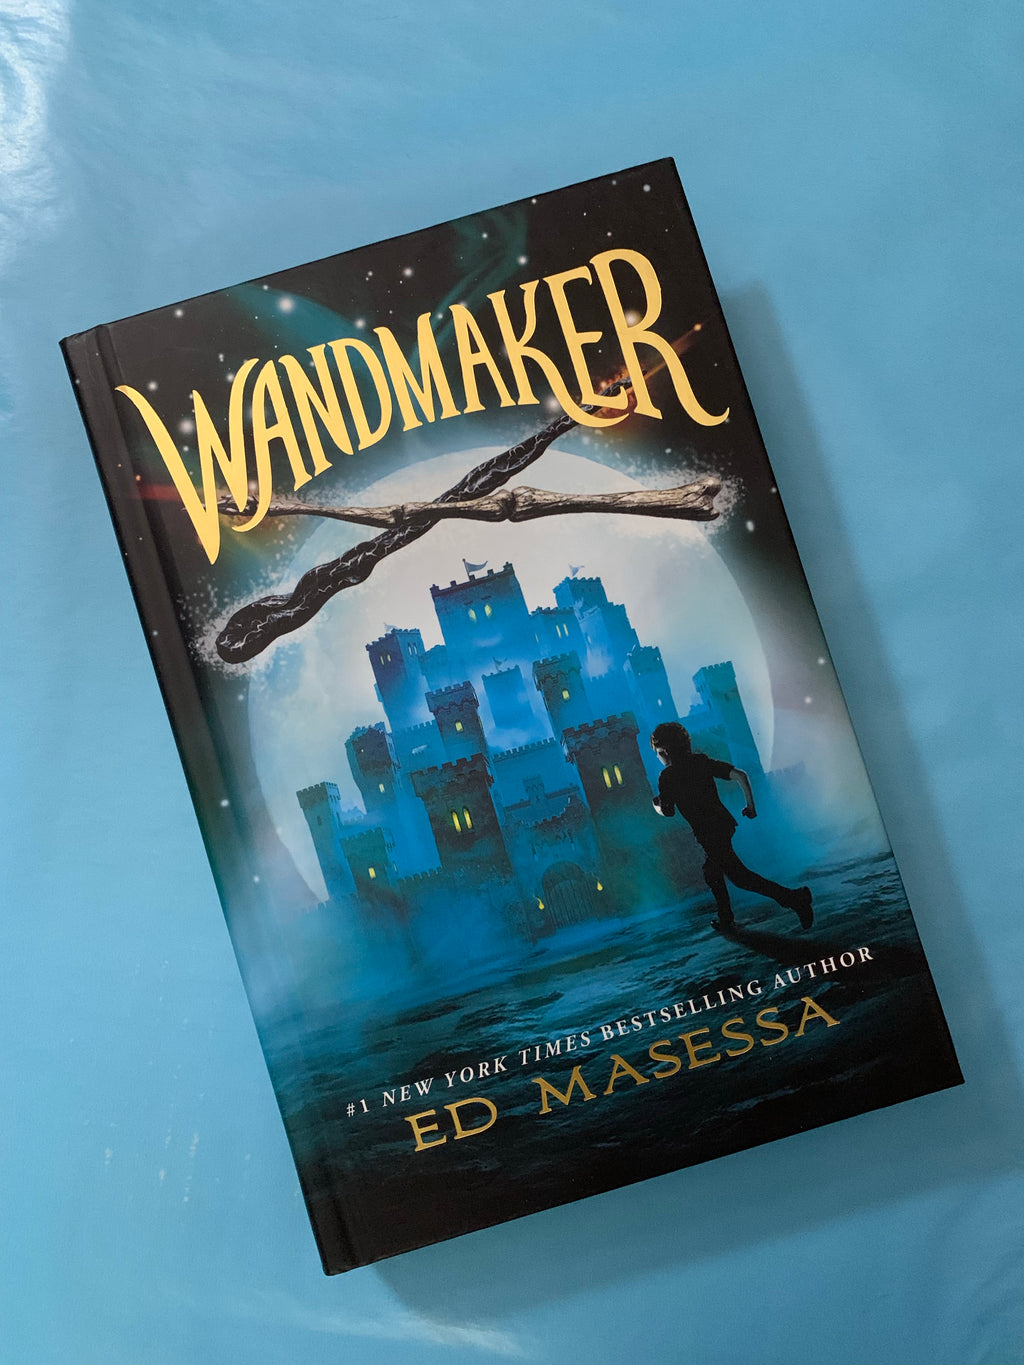 Wandmaker- By Ed Masessa